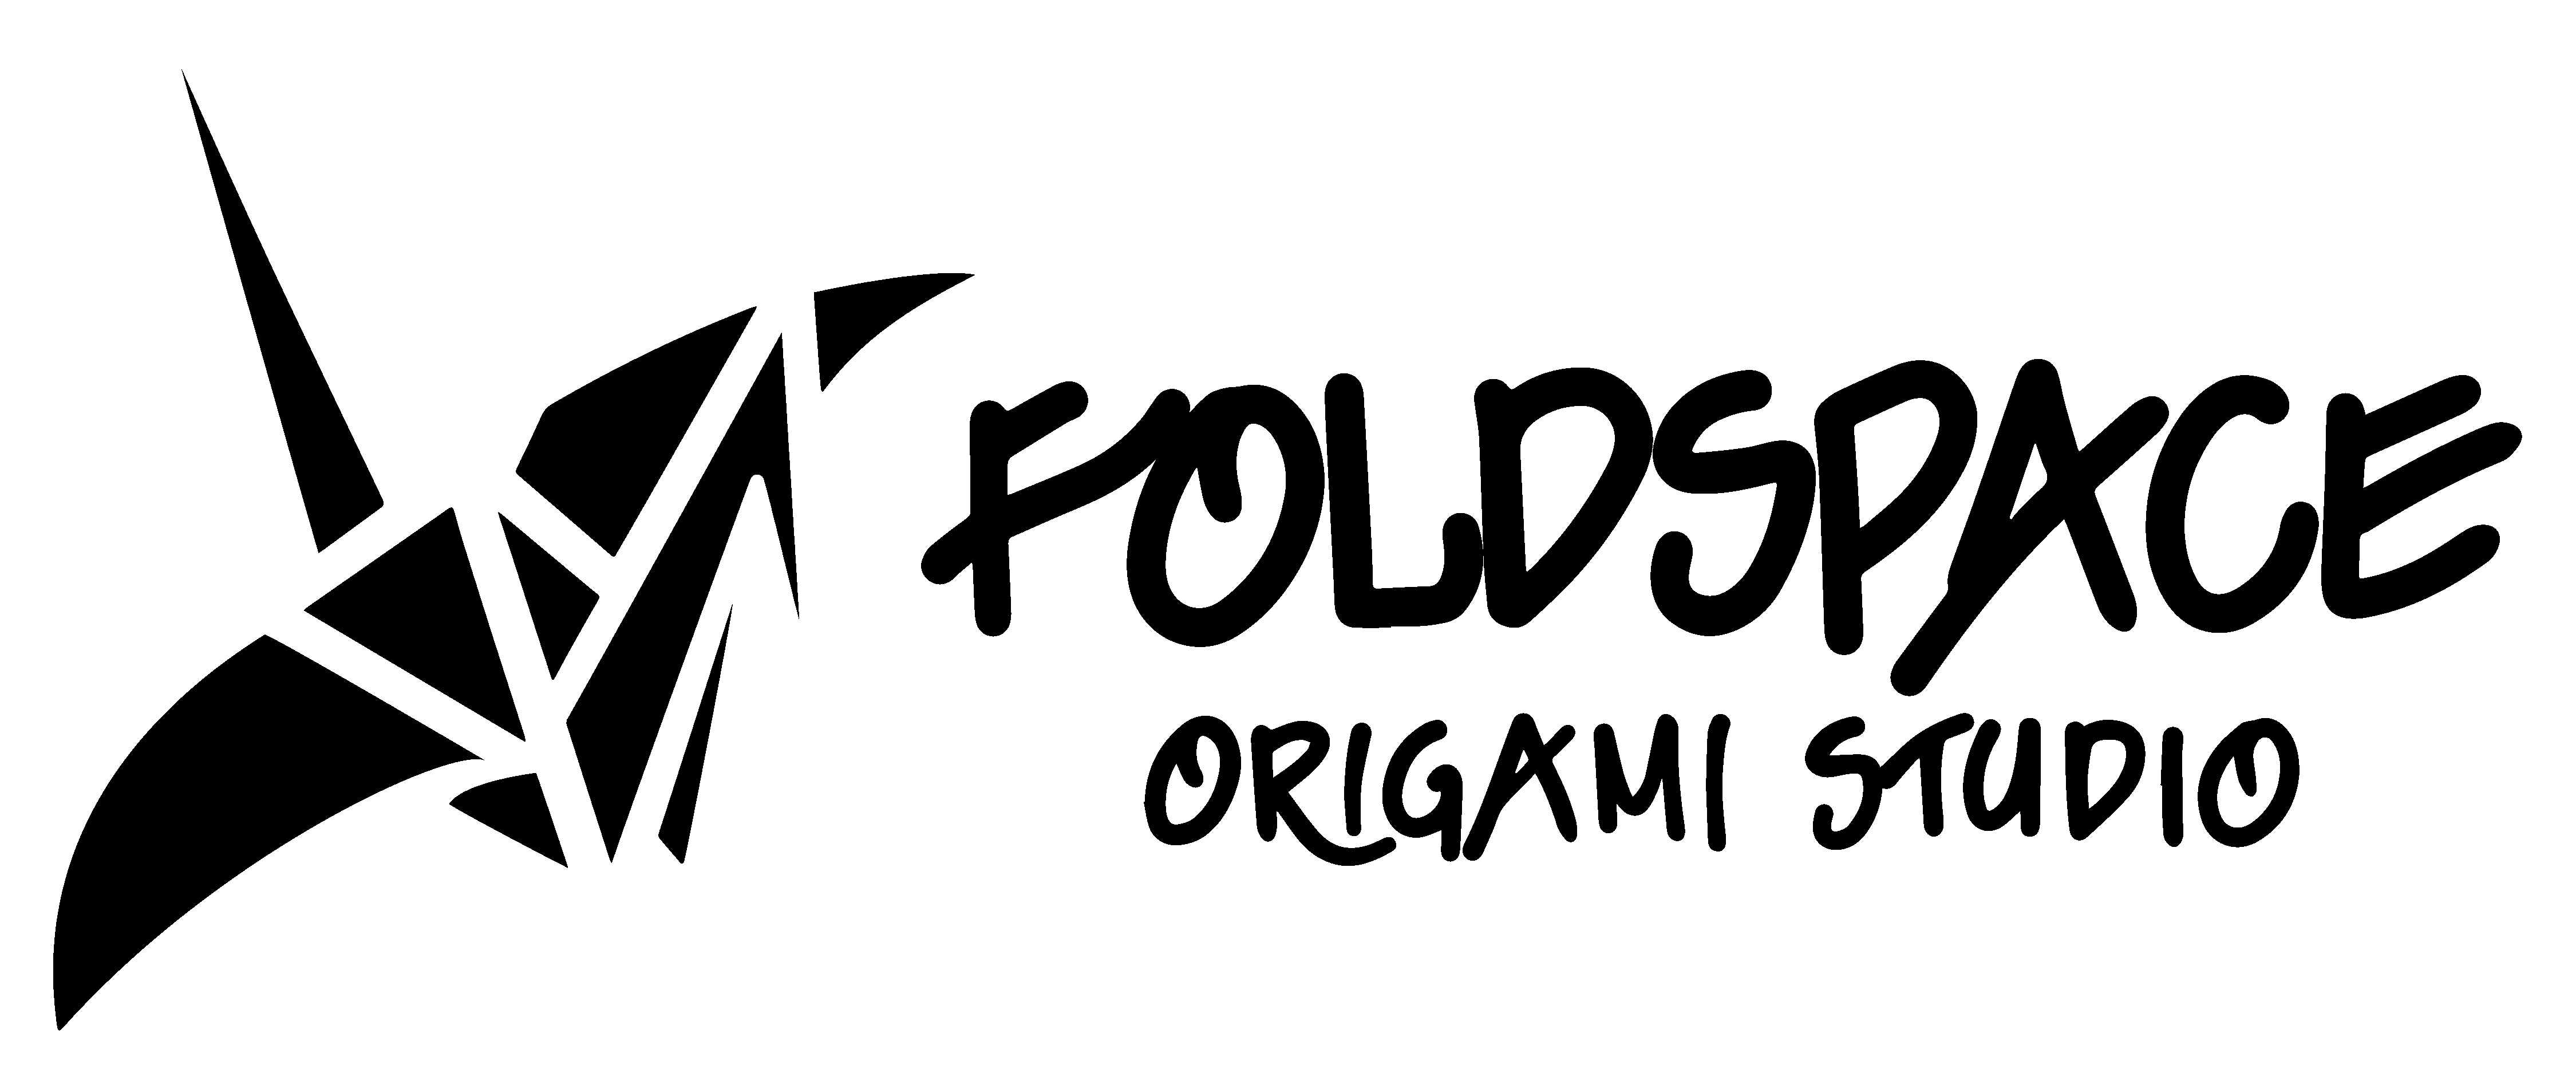 Foldspace Origami Studio